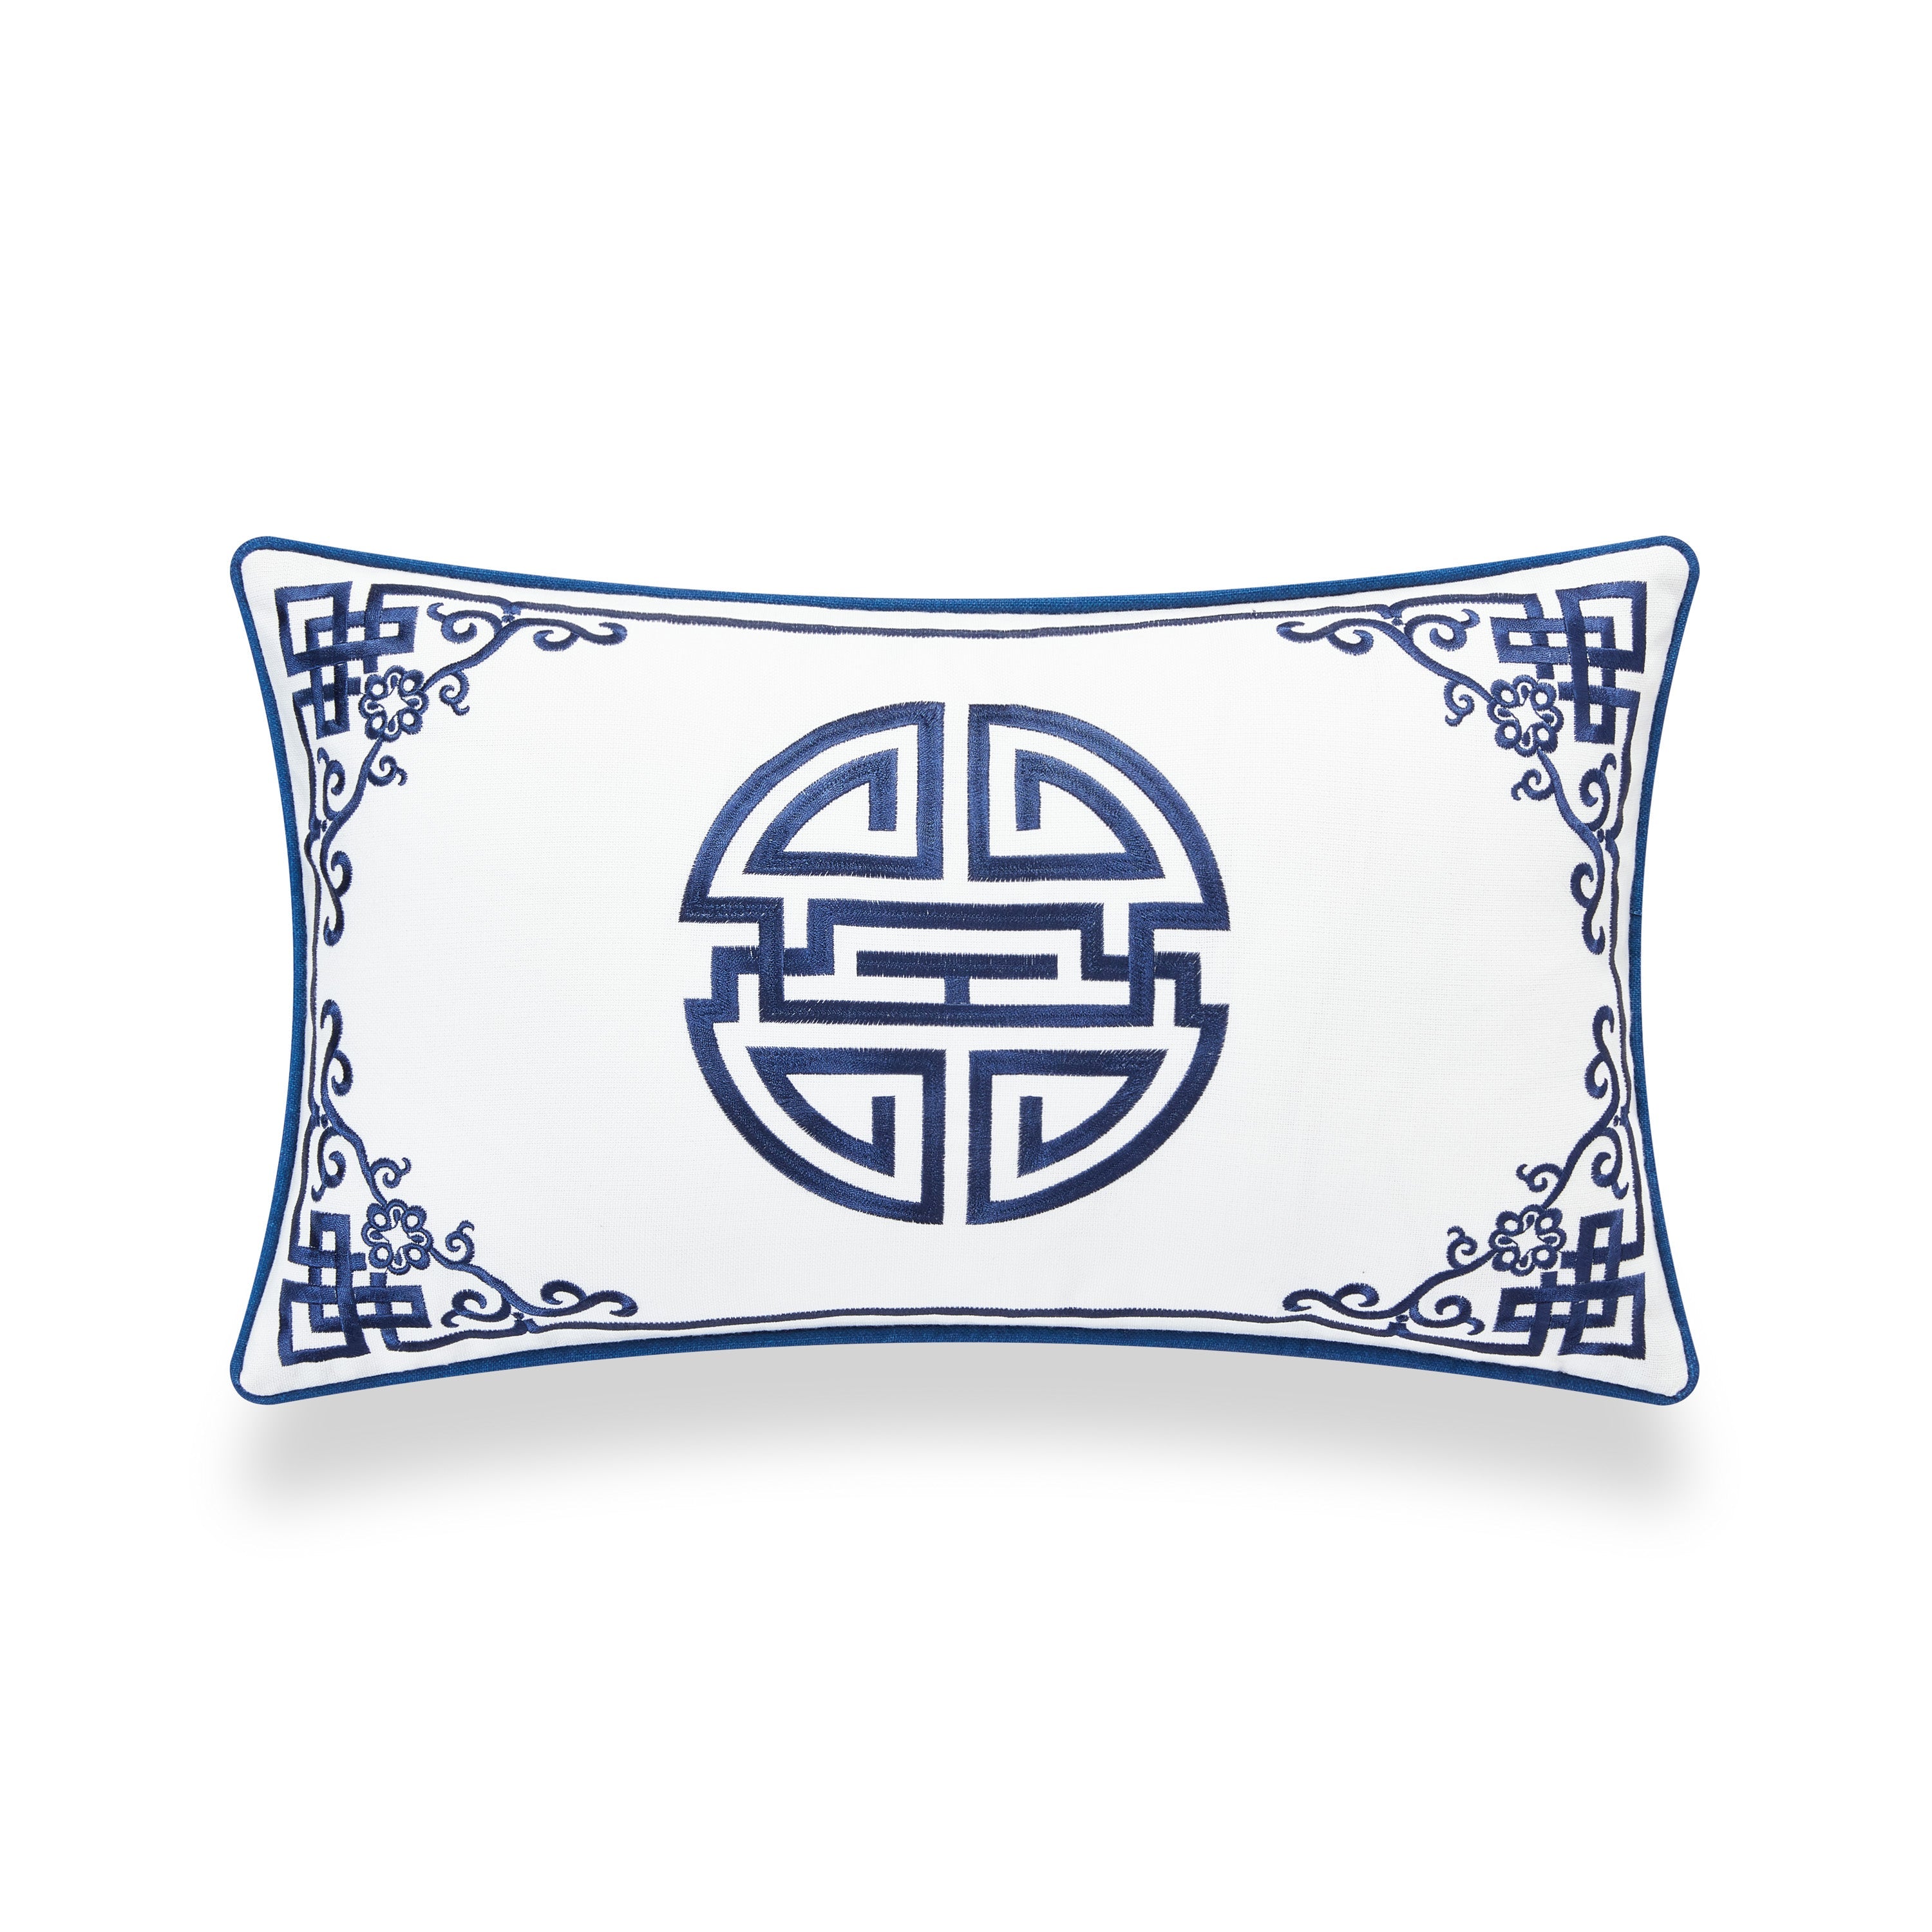 Coastal Hampton Style Indoor Outdoor Lumbar Pillow Cover, Embroidered Longevity Symbol, Navy Blue, 12"x20"